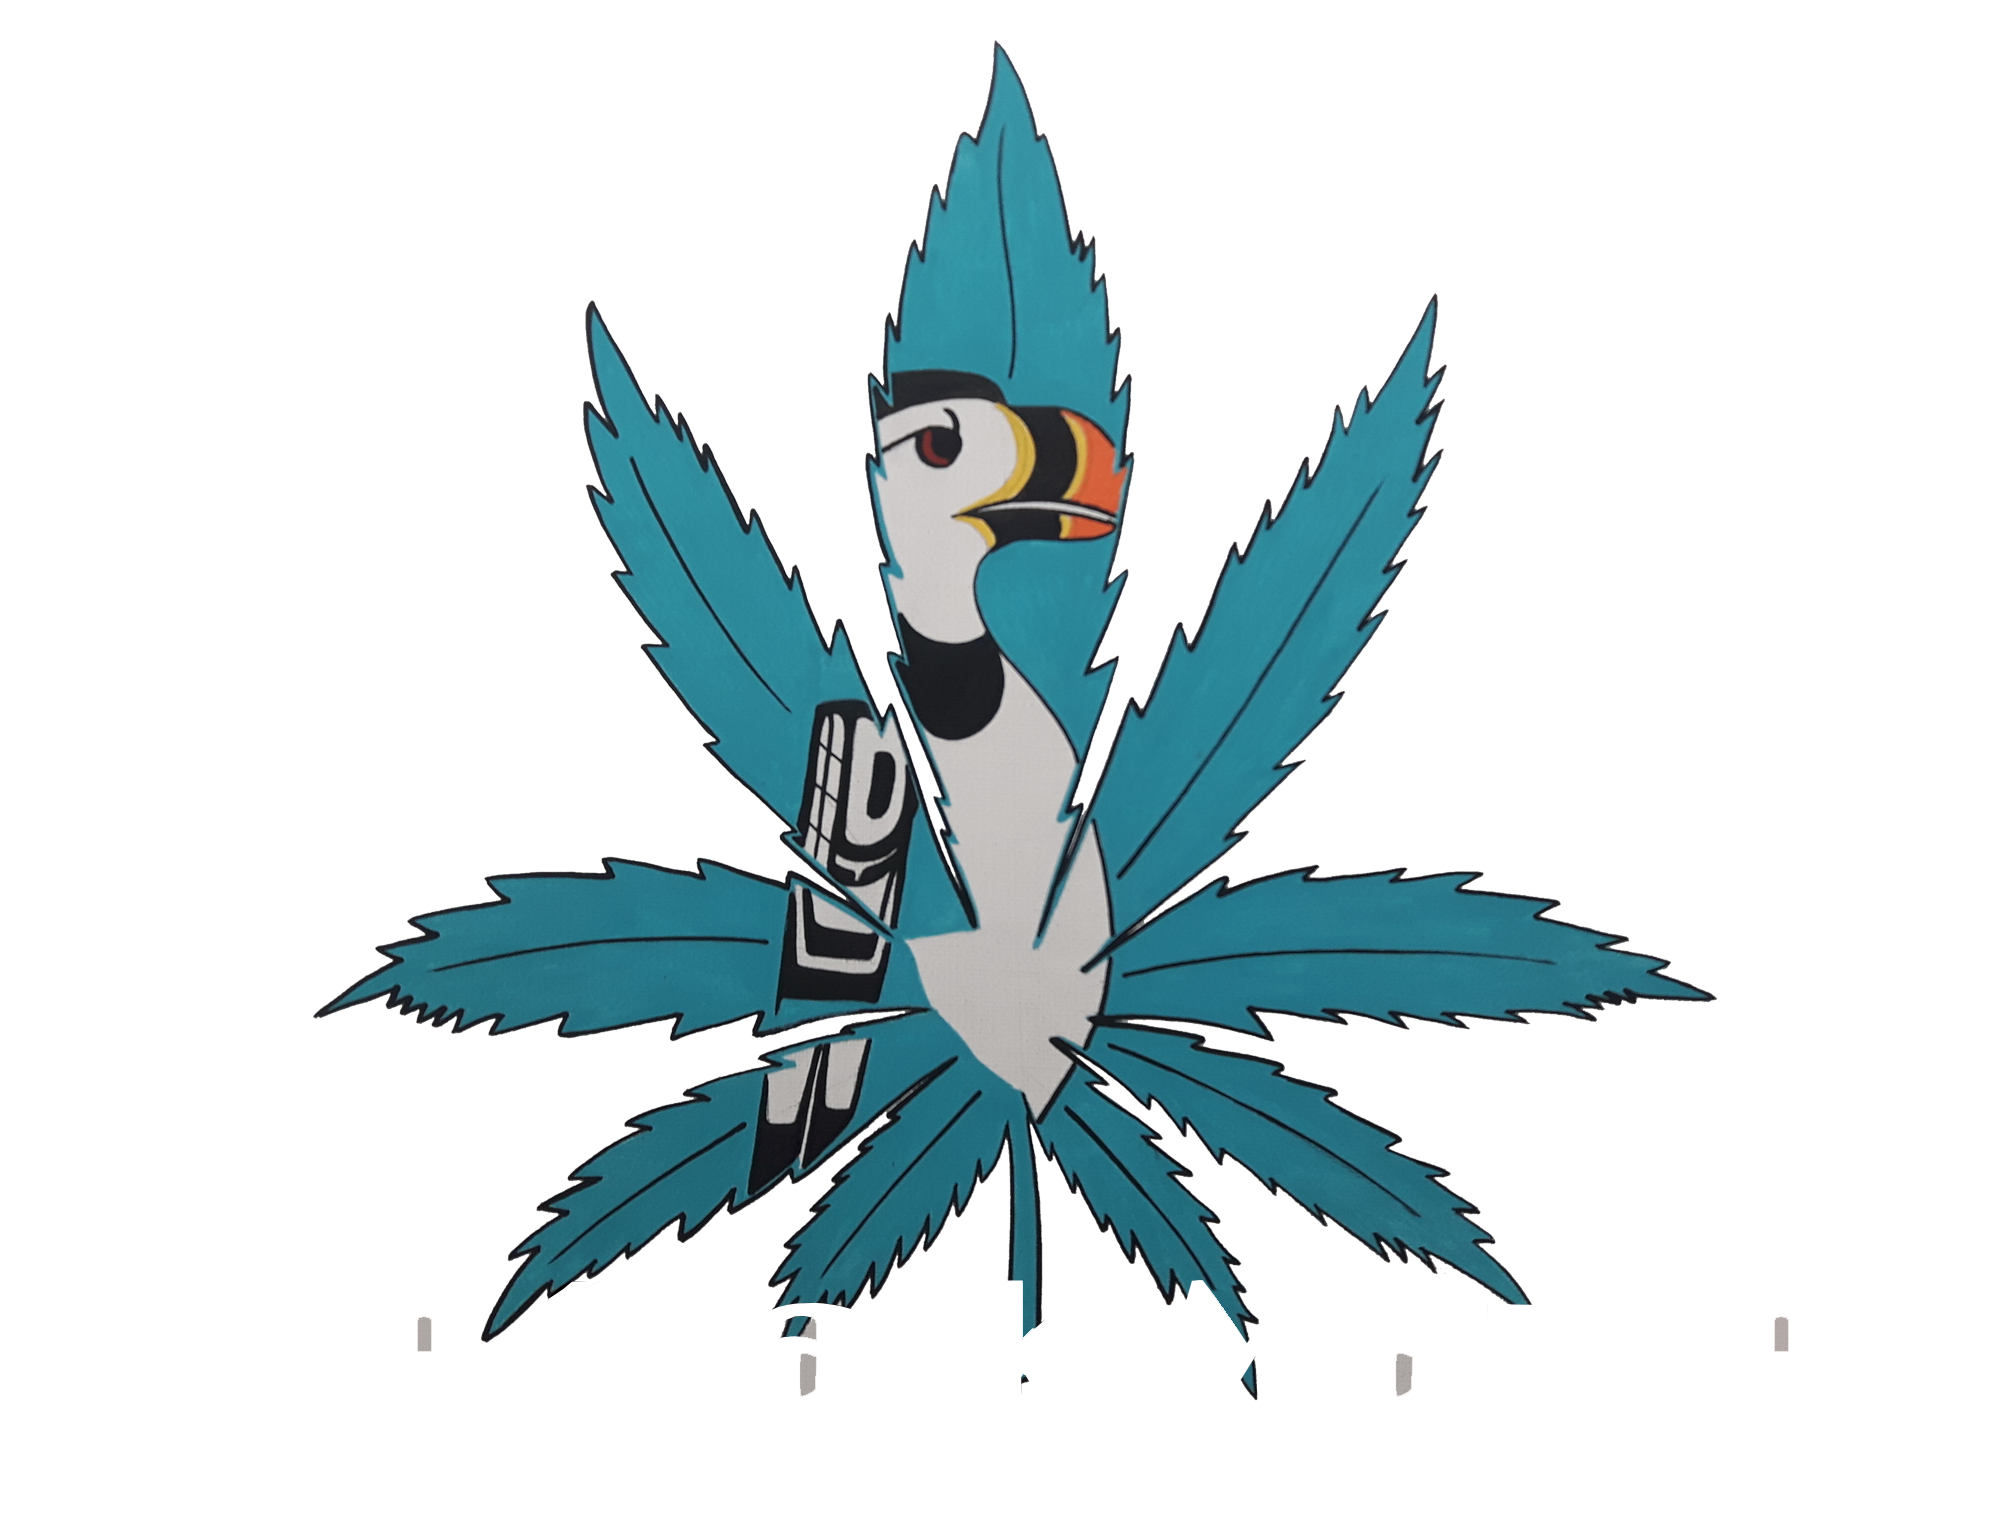 The Stalk Market